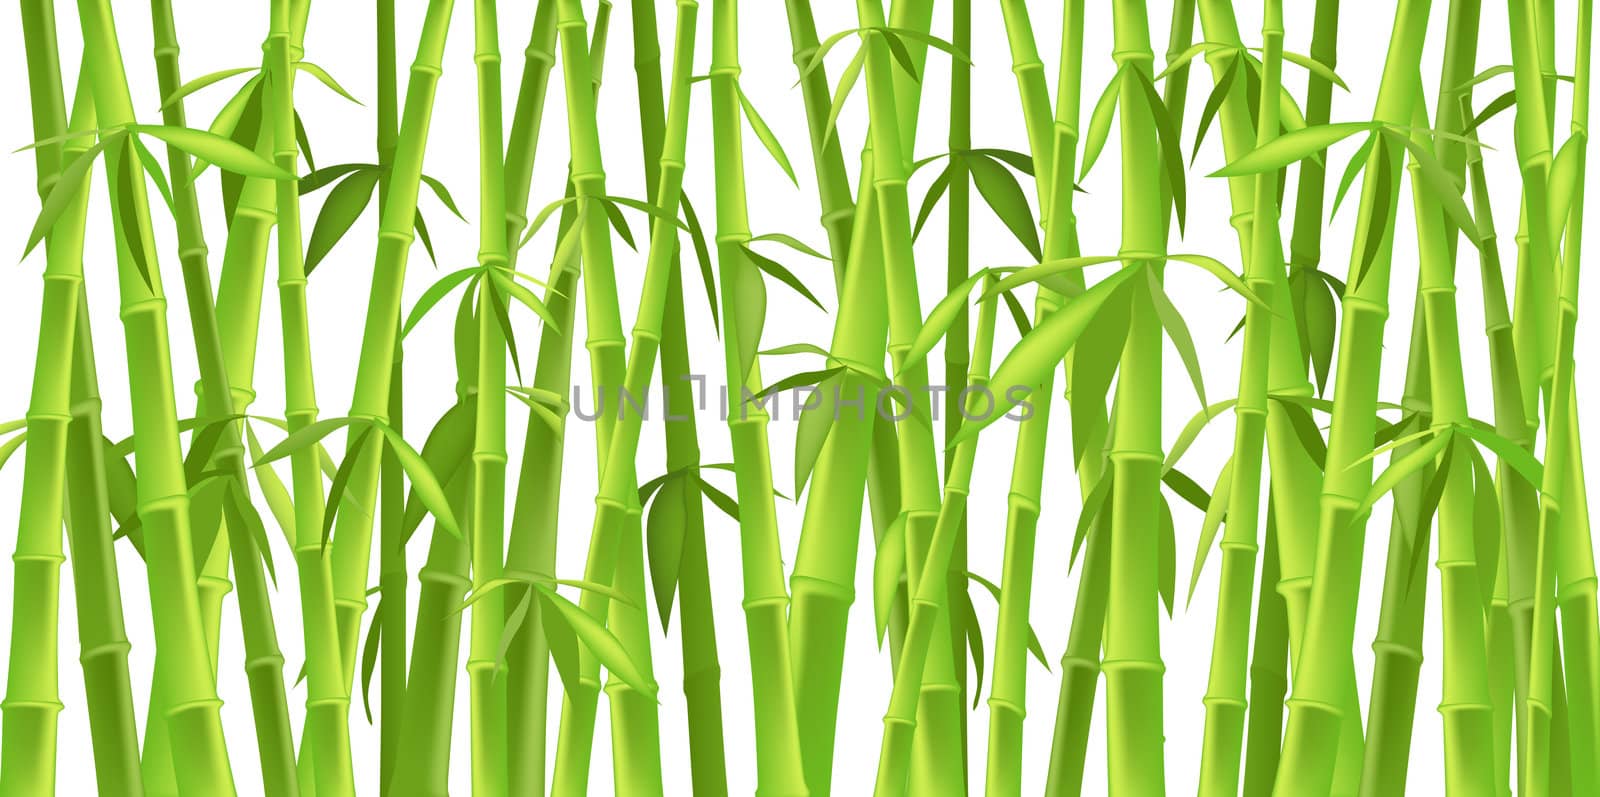 design of chinese bamboo trees, illustration background